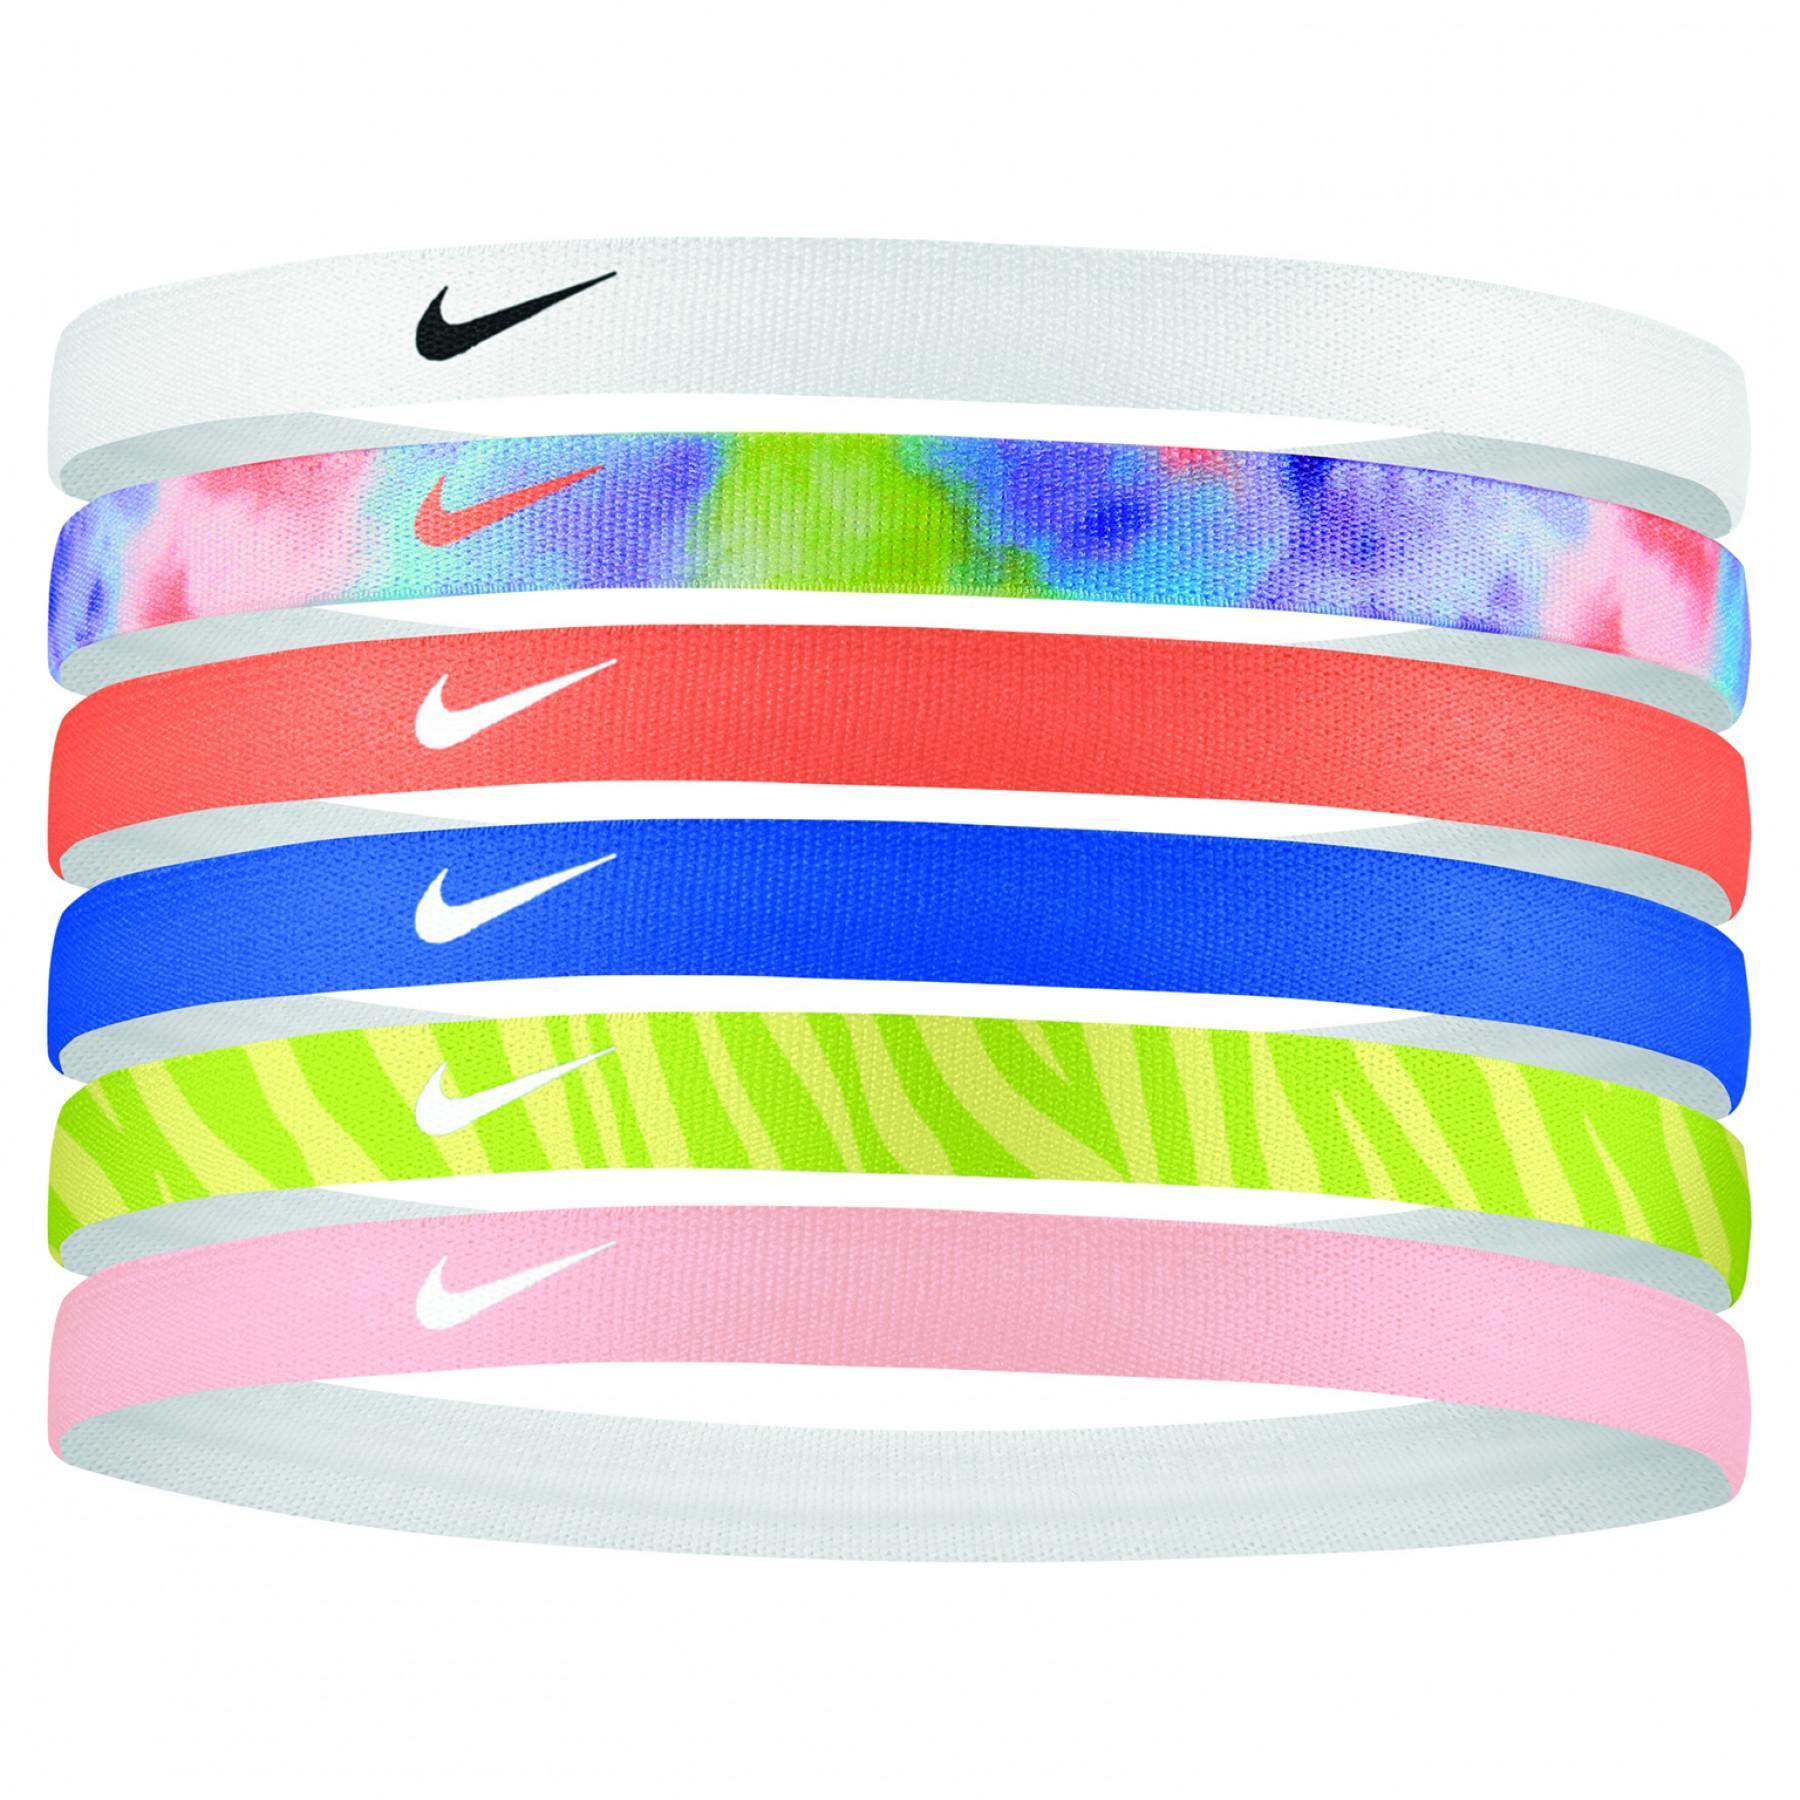 Резинка найк. Nike Headbands 6-Pack. Nike Printed Headbands. Nike Elastic Hairbands. Nike Tipped Headband 6pk - Multicolor.